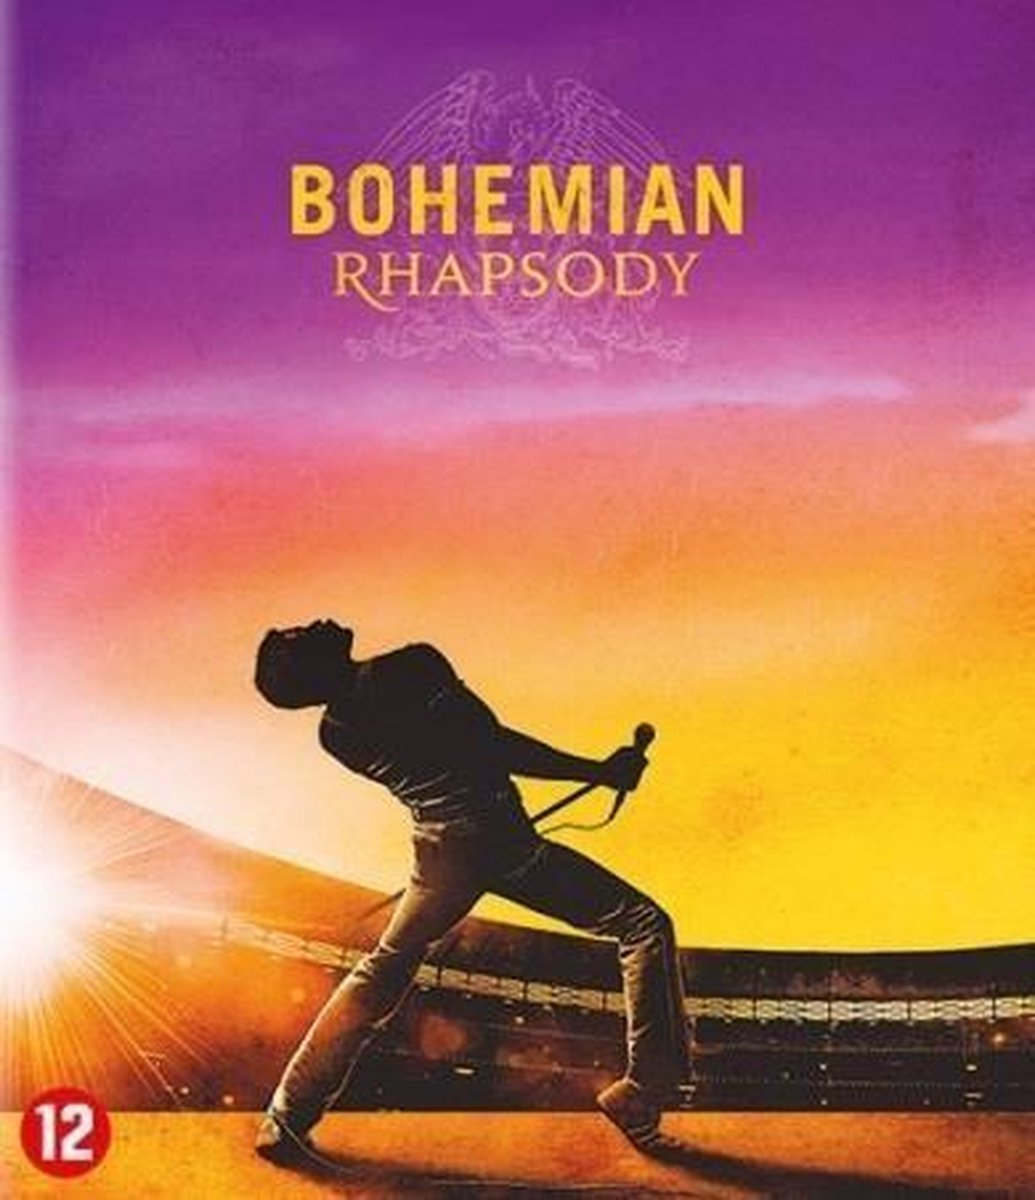 Bohemian Rhapsody (Blu-ray) - Disney Movies